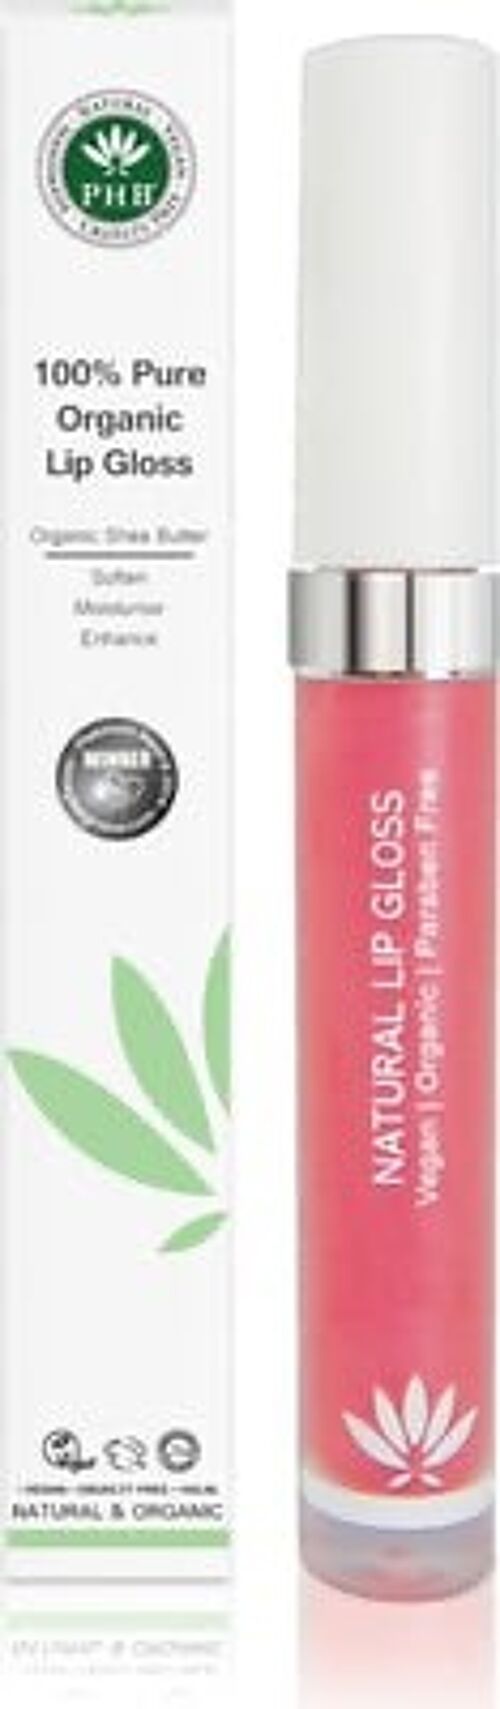 Pure Organic Lip Gloss Camellia